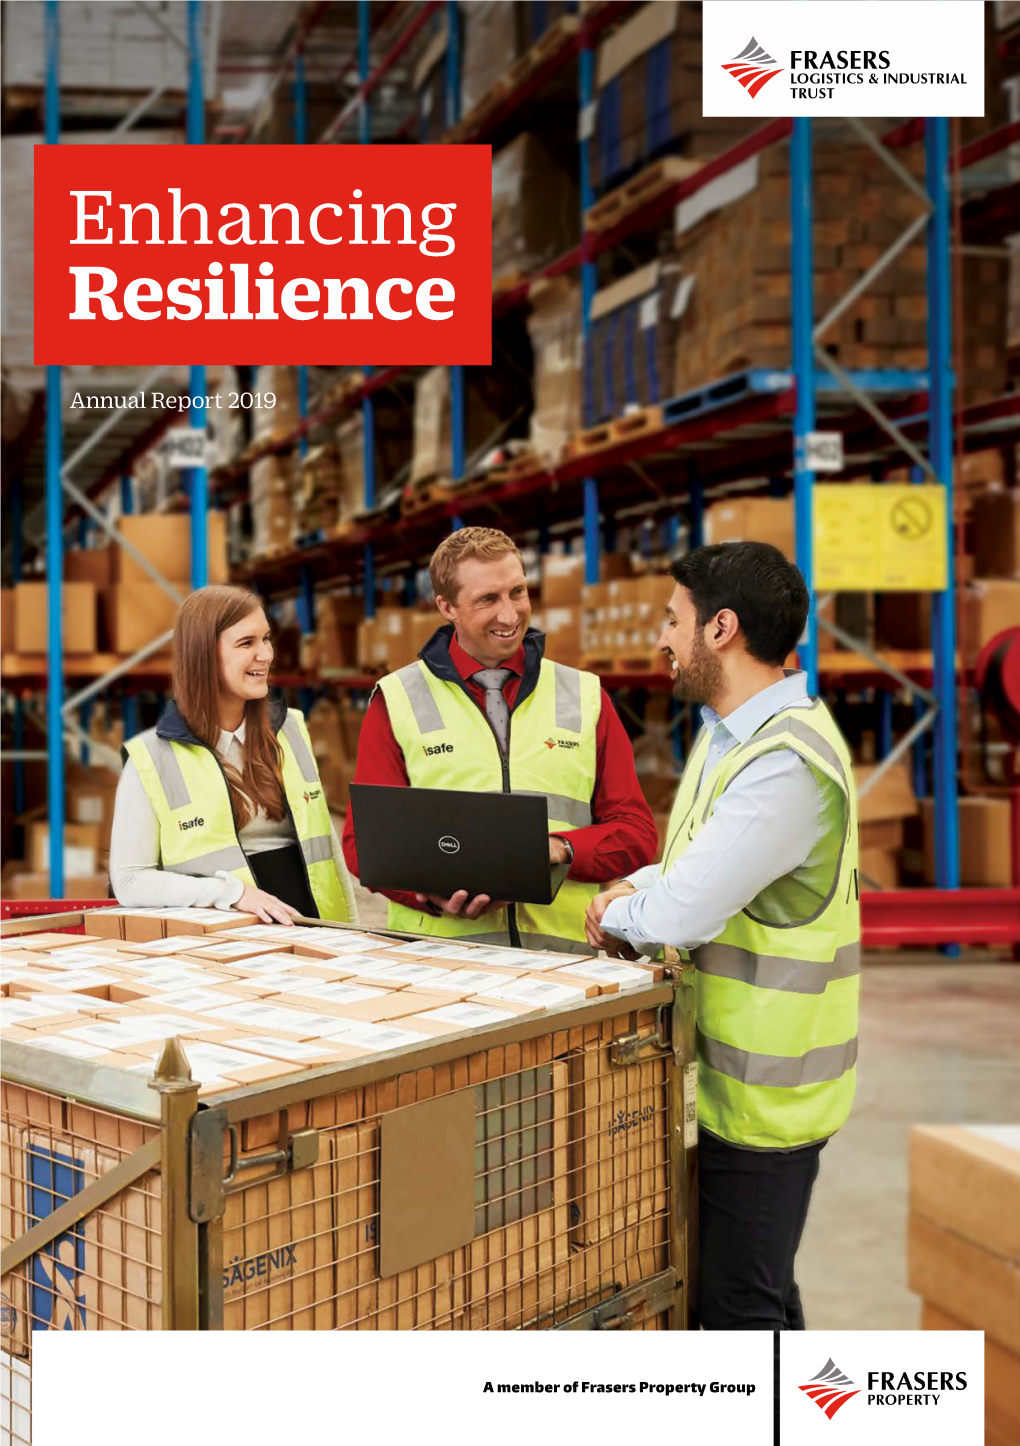 Enhancing Resilience